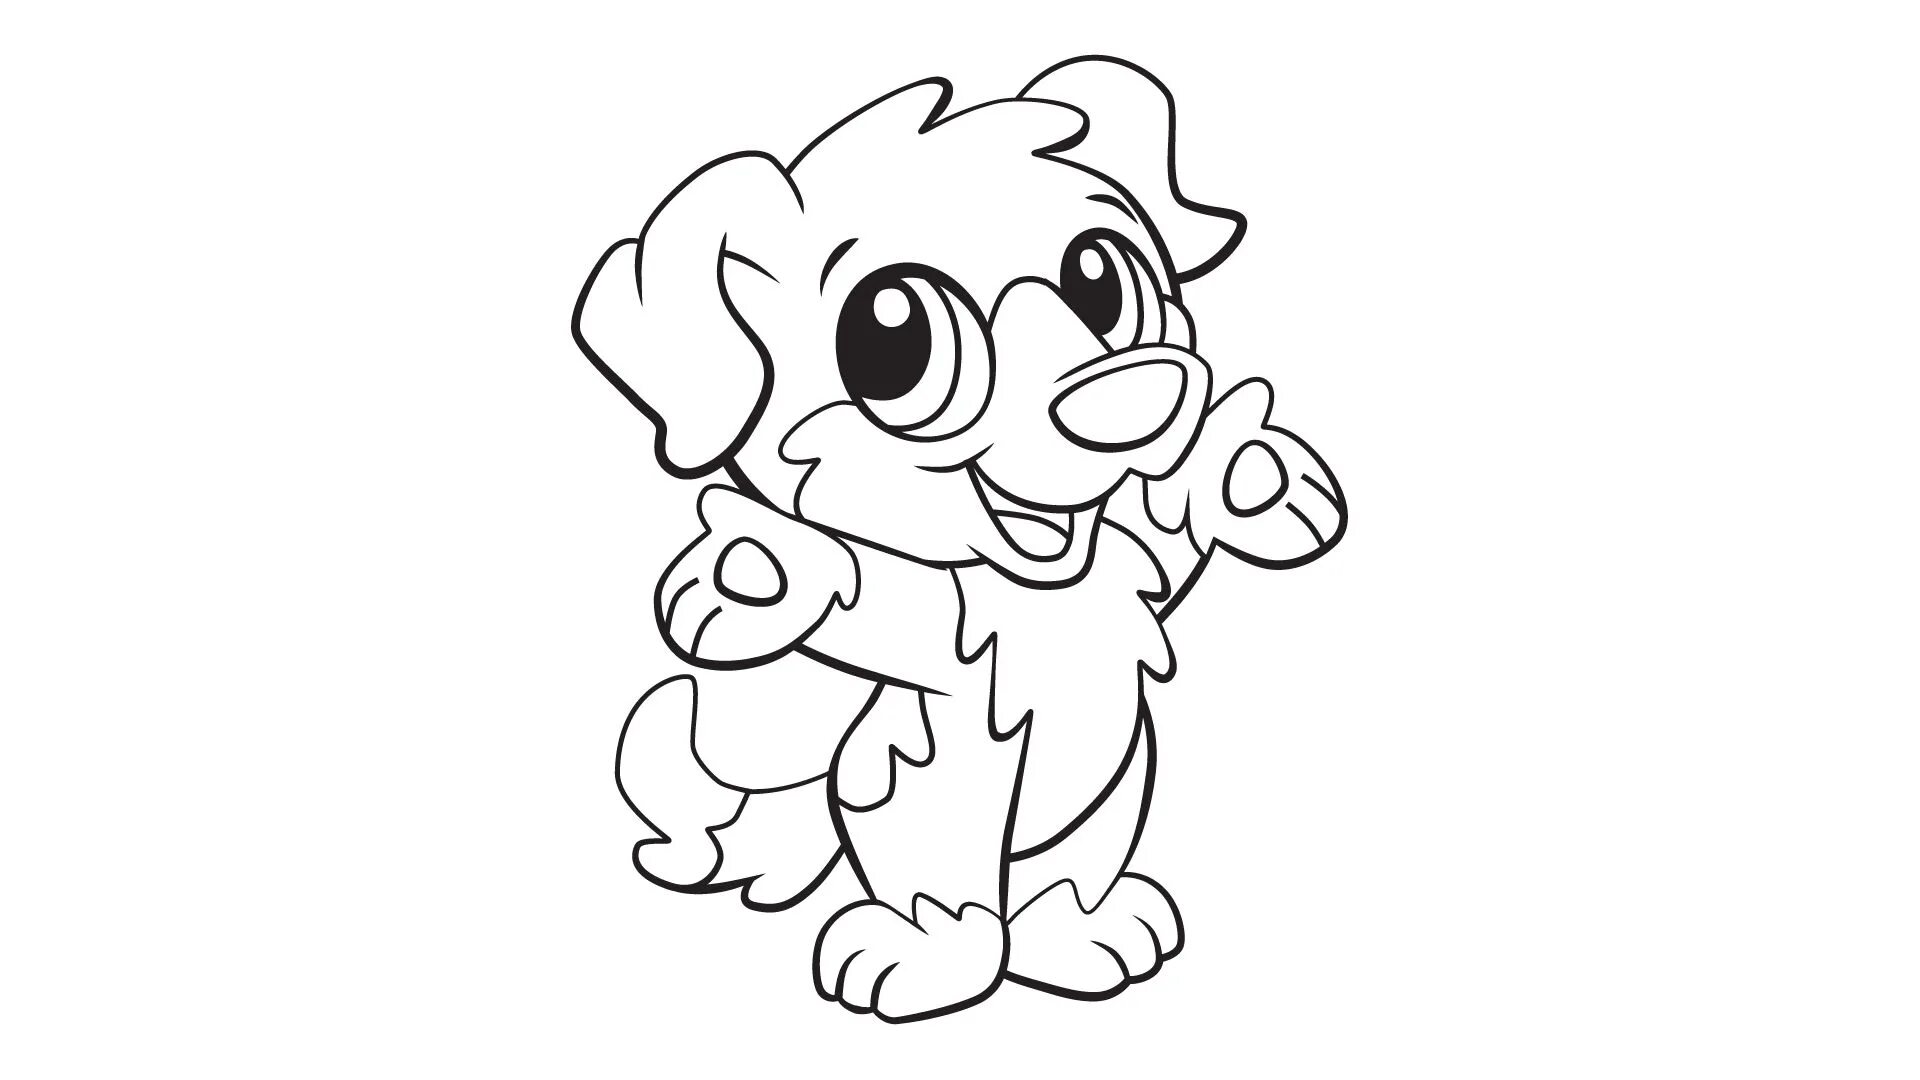 Sweet cute dog coloring book